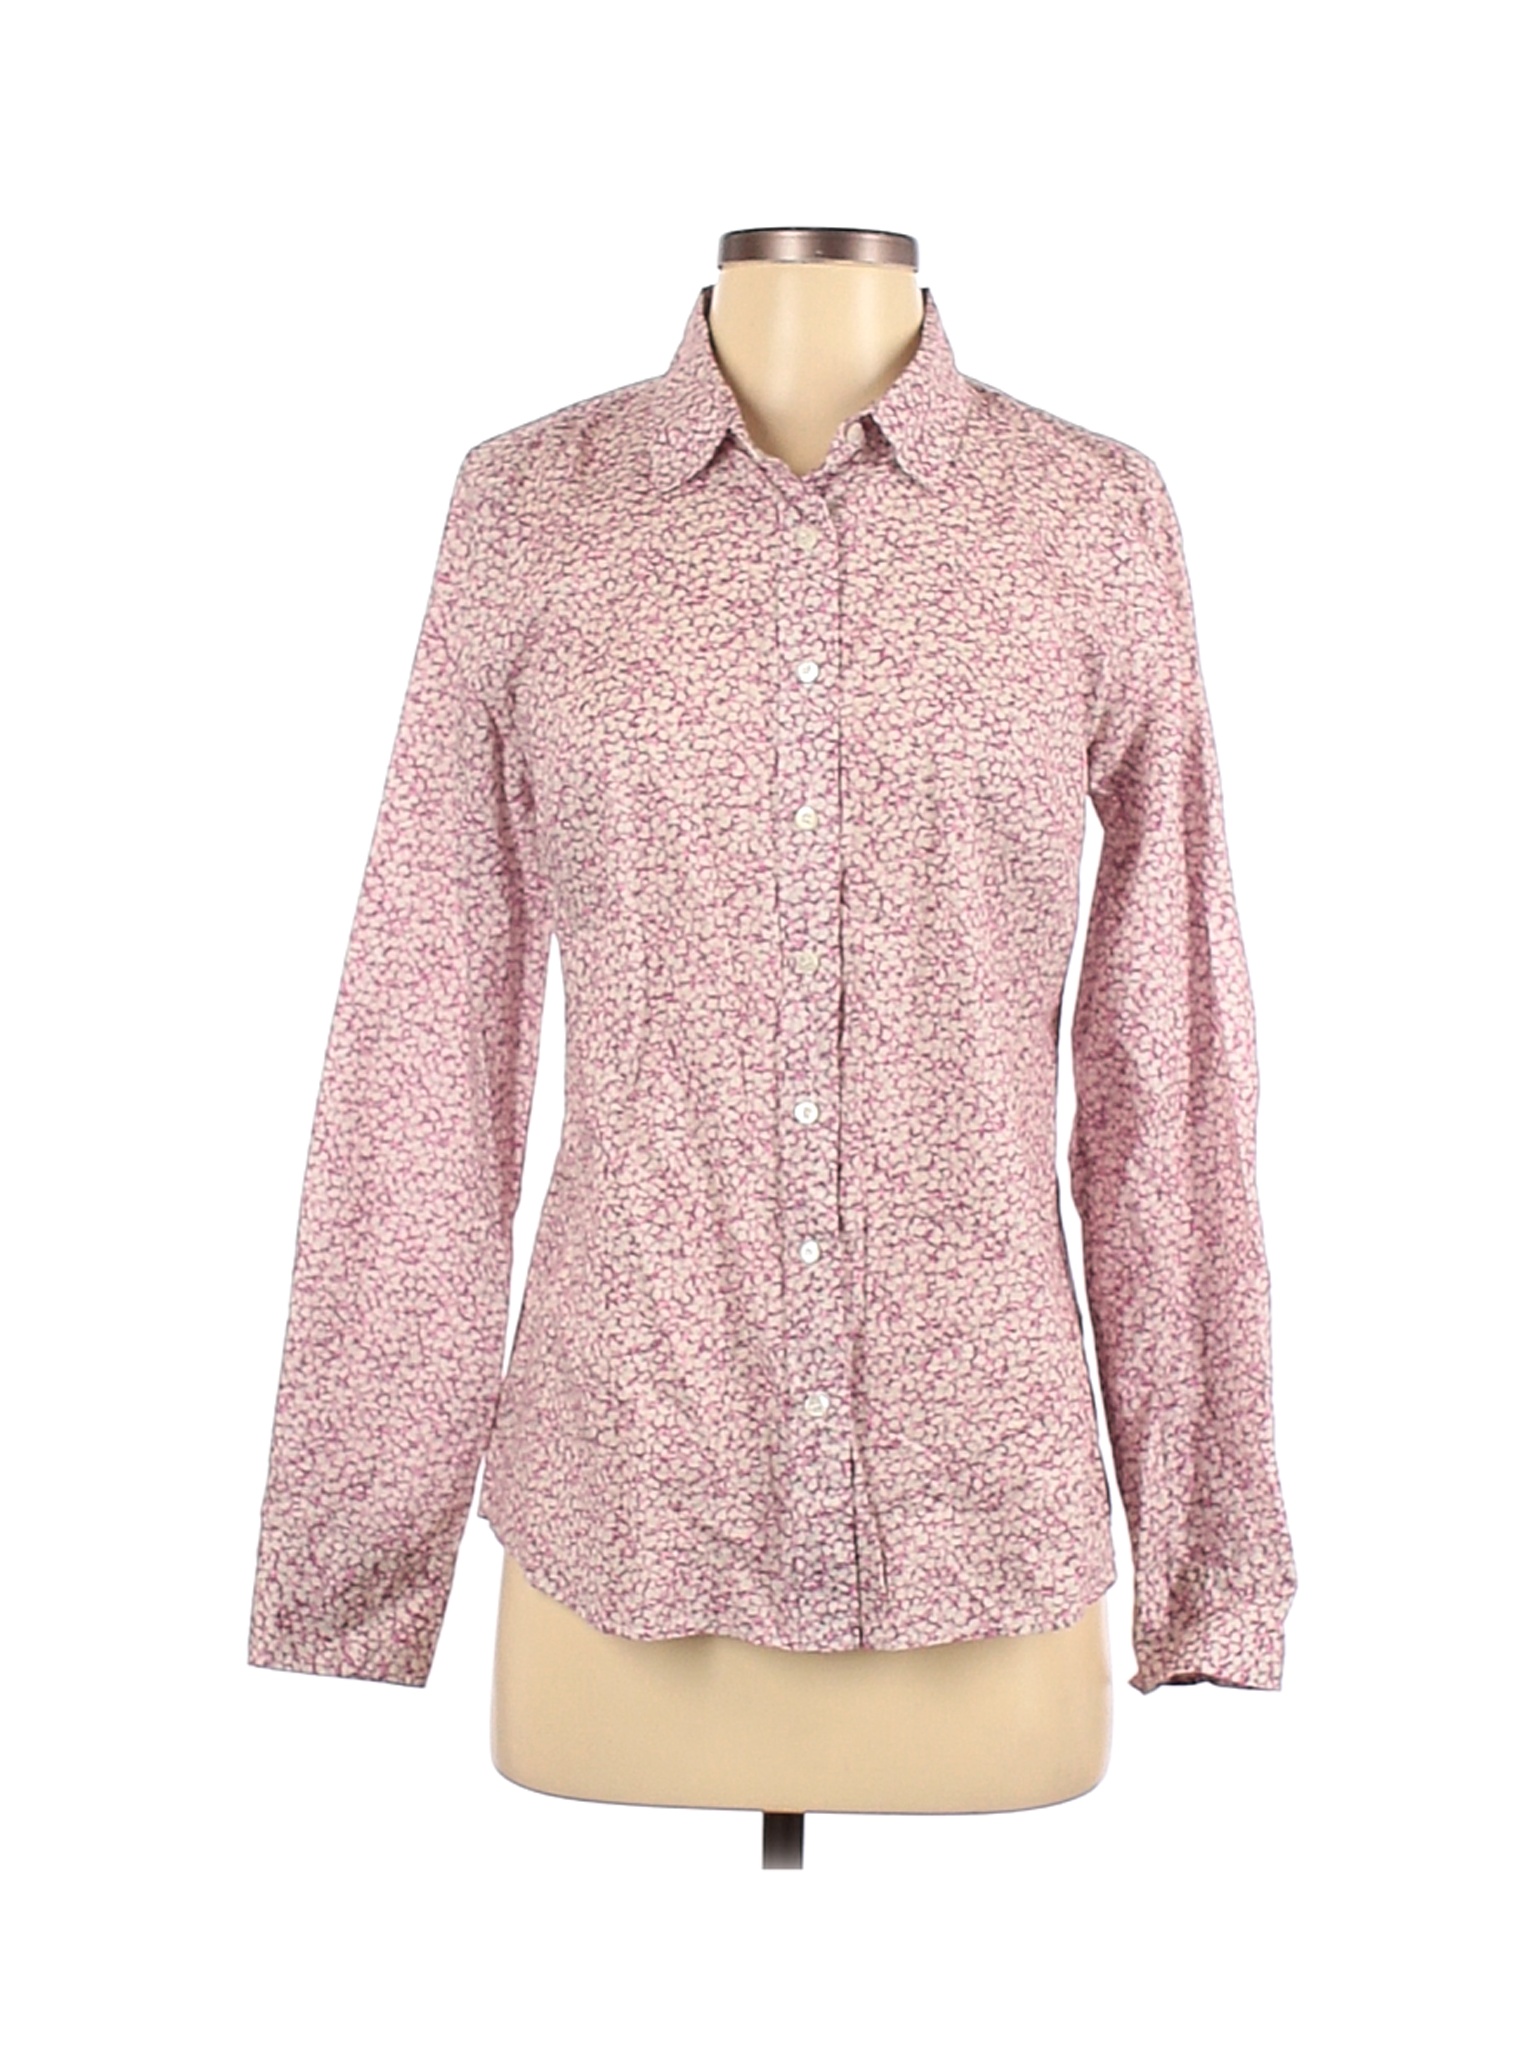 Liberty Art Fabrics for J.Crew Women Pink Long Sleeve Blouse 6 | eBay